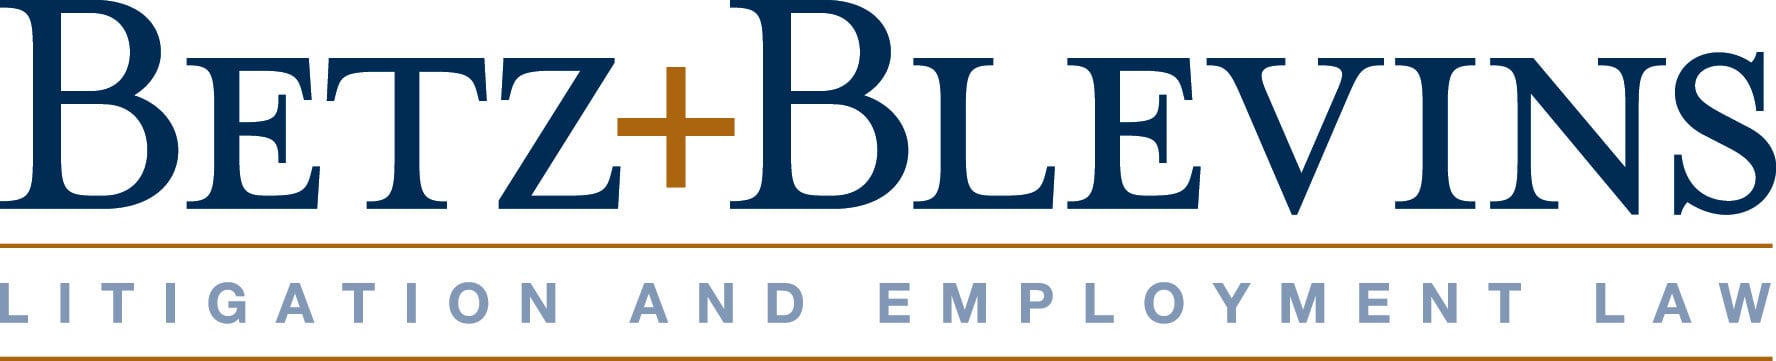 Betz + Blevins Litigation and Employment Law